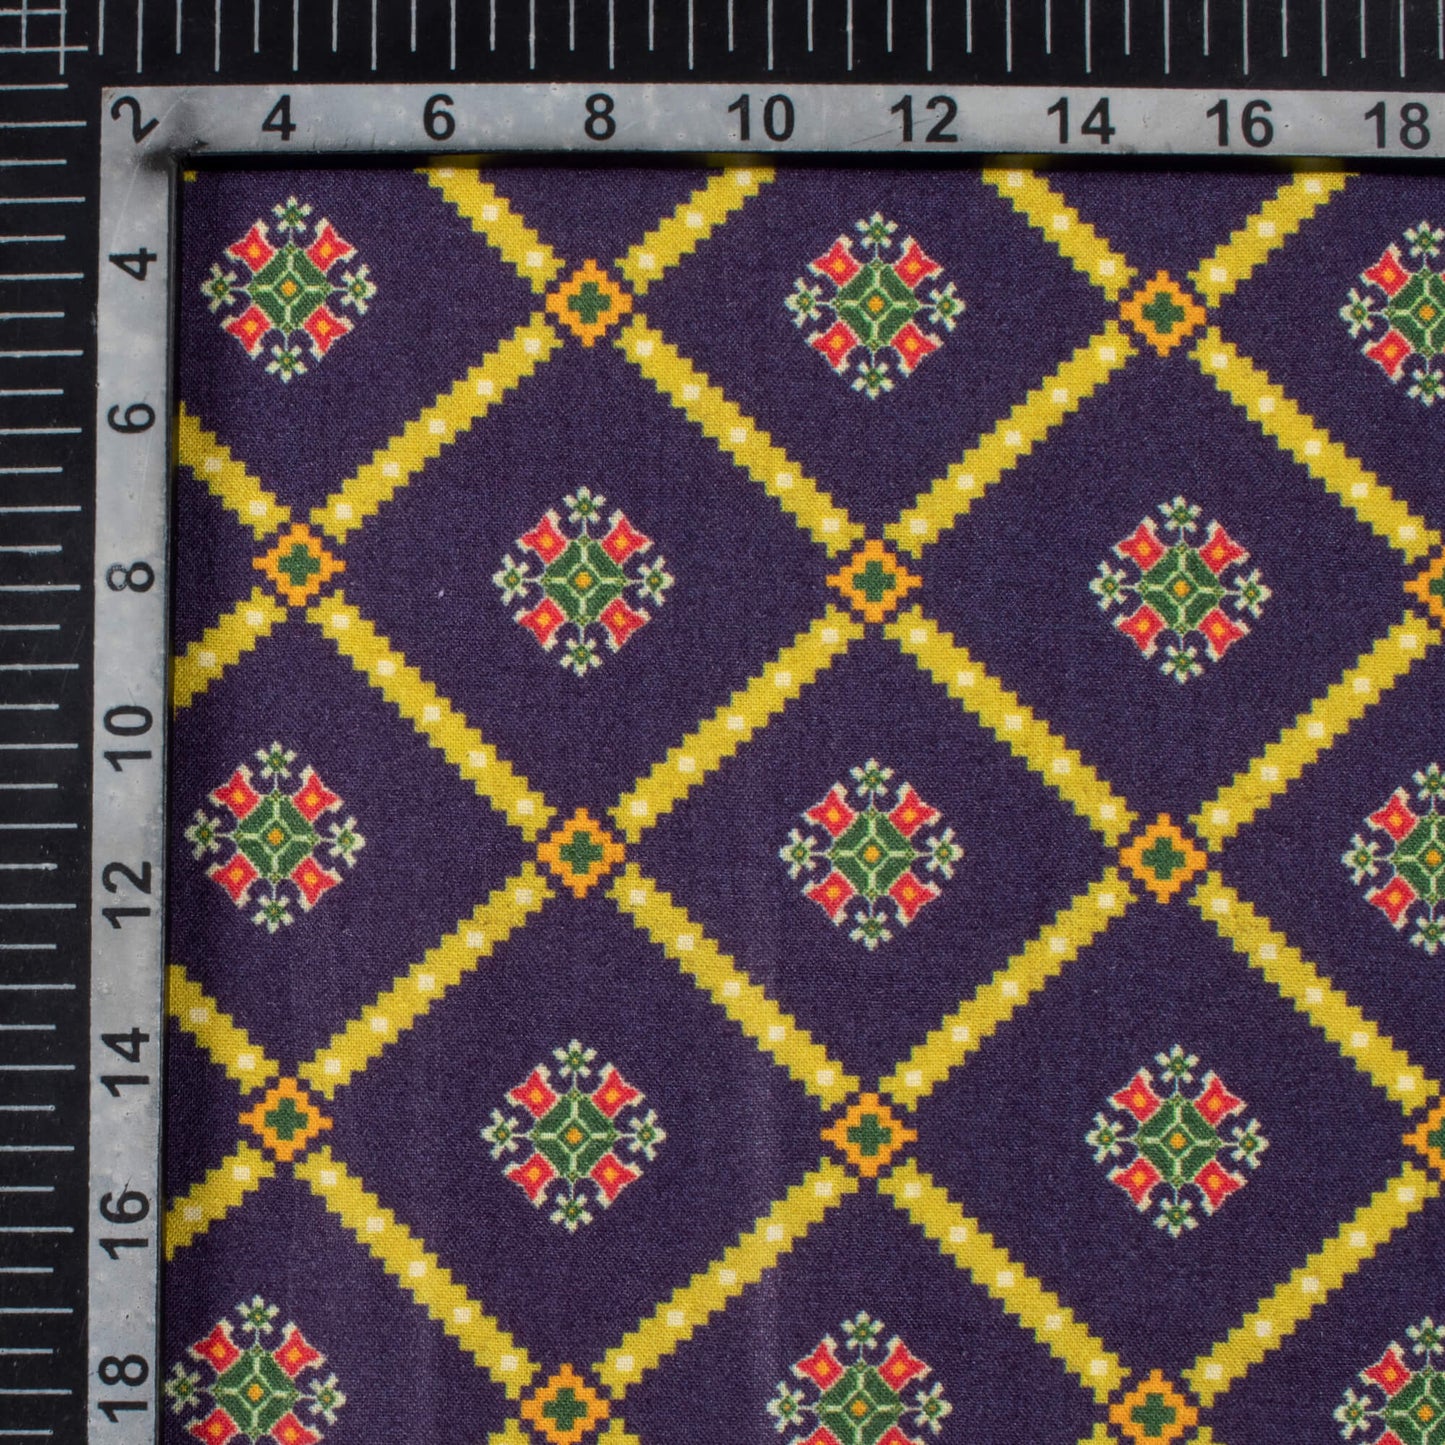 Oxford Blue And Dijon Yellow Patola Pattern Digital Print Viscose Rayon Fabric (Width 58 Inches)